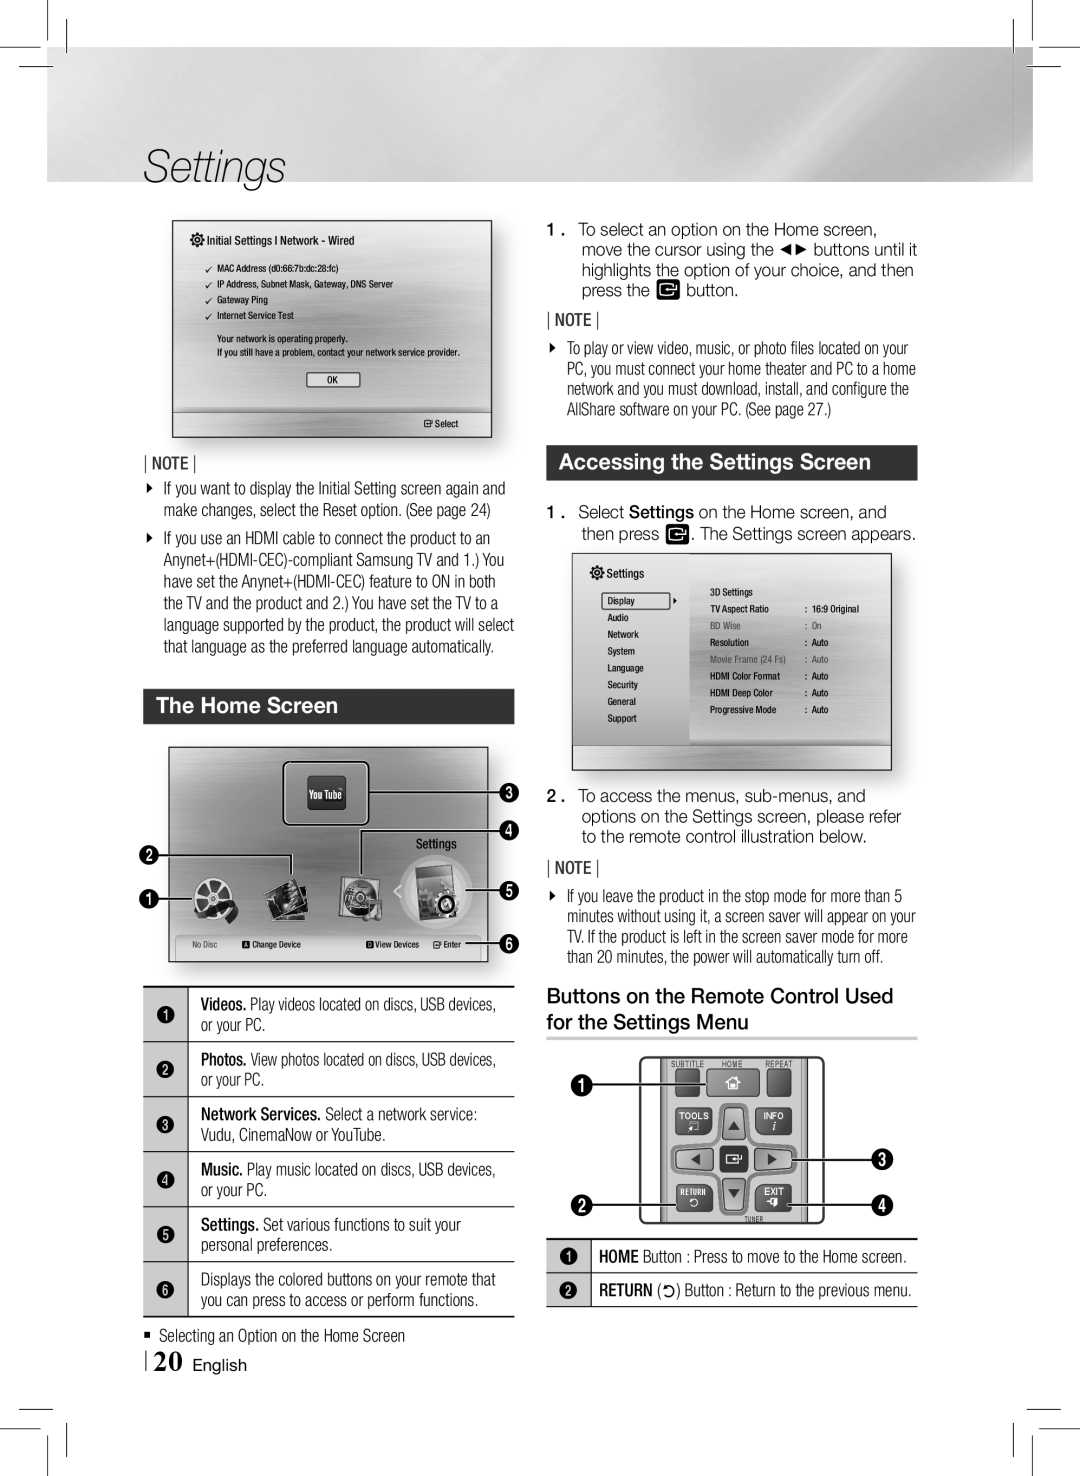 Samsung HTE3500ZA user manual The Home Screen, Accessing the Settings Screen 